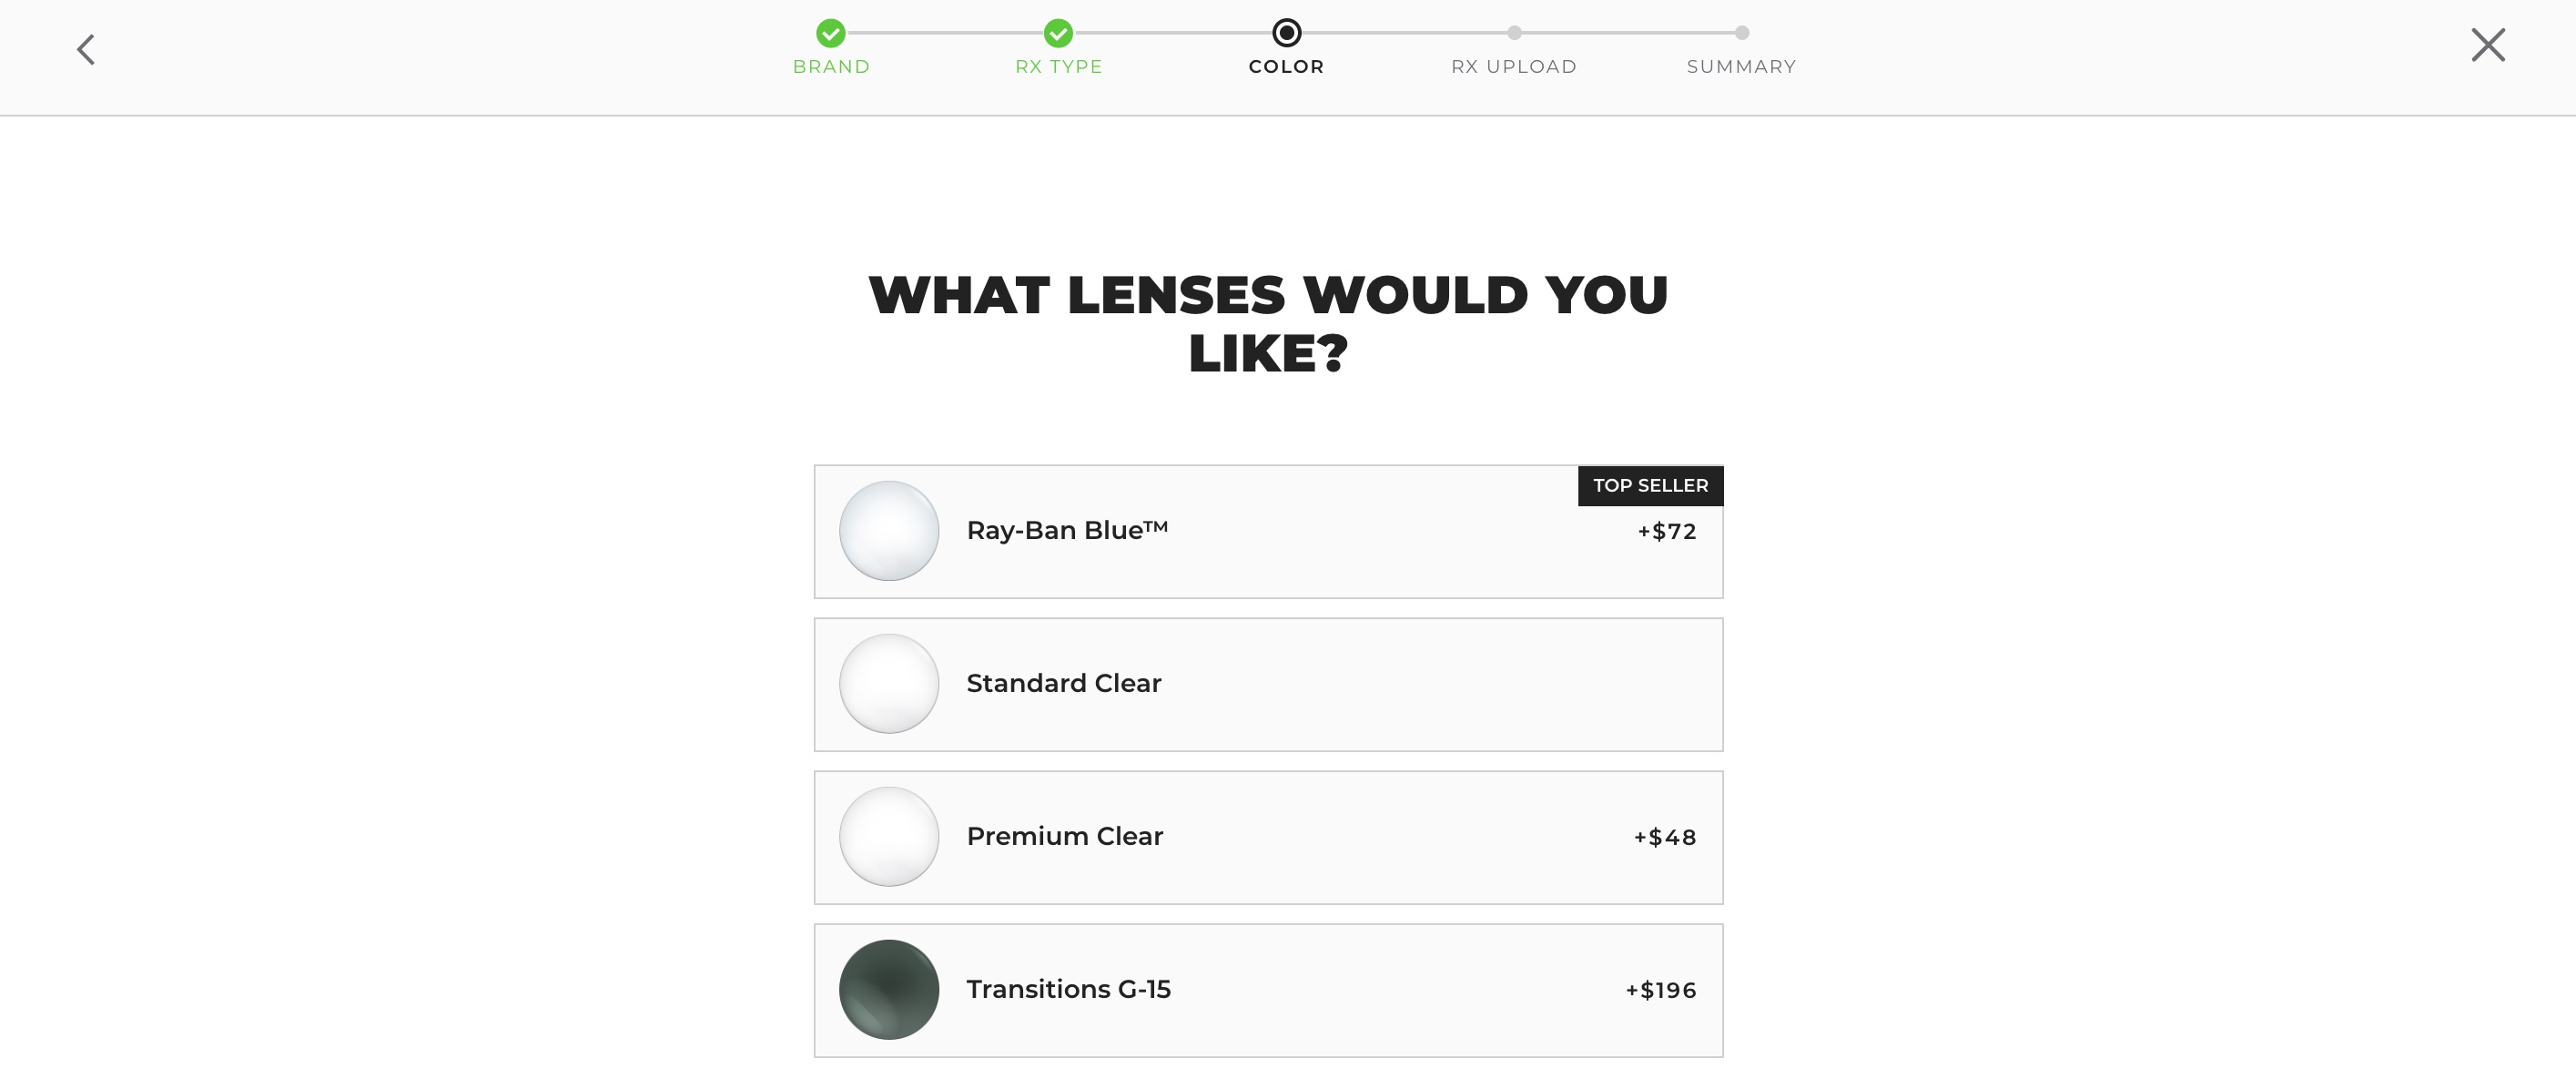 ray ban lens colors